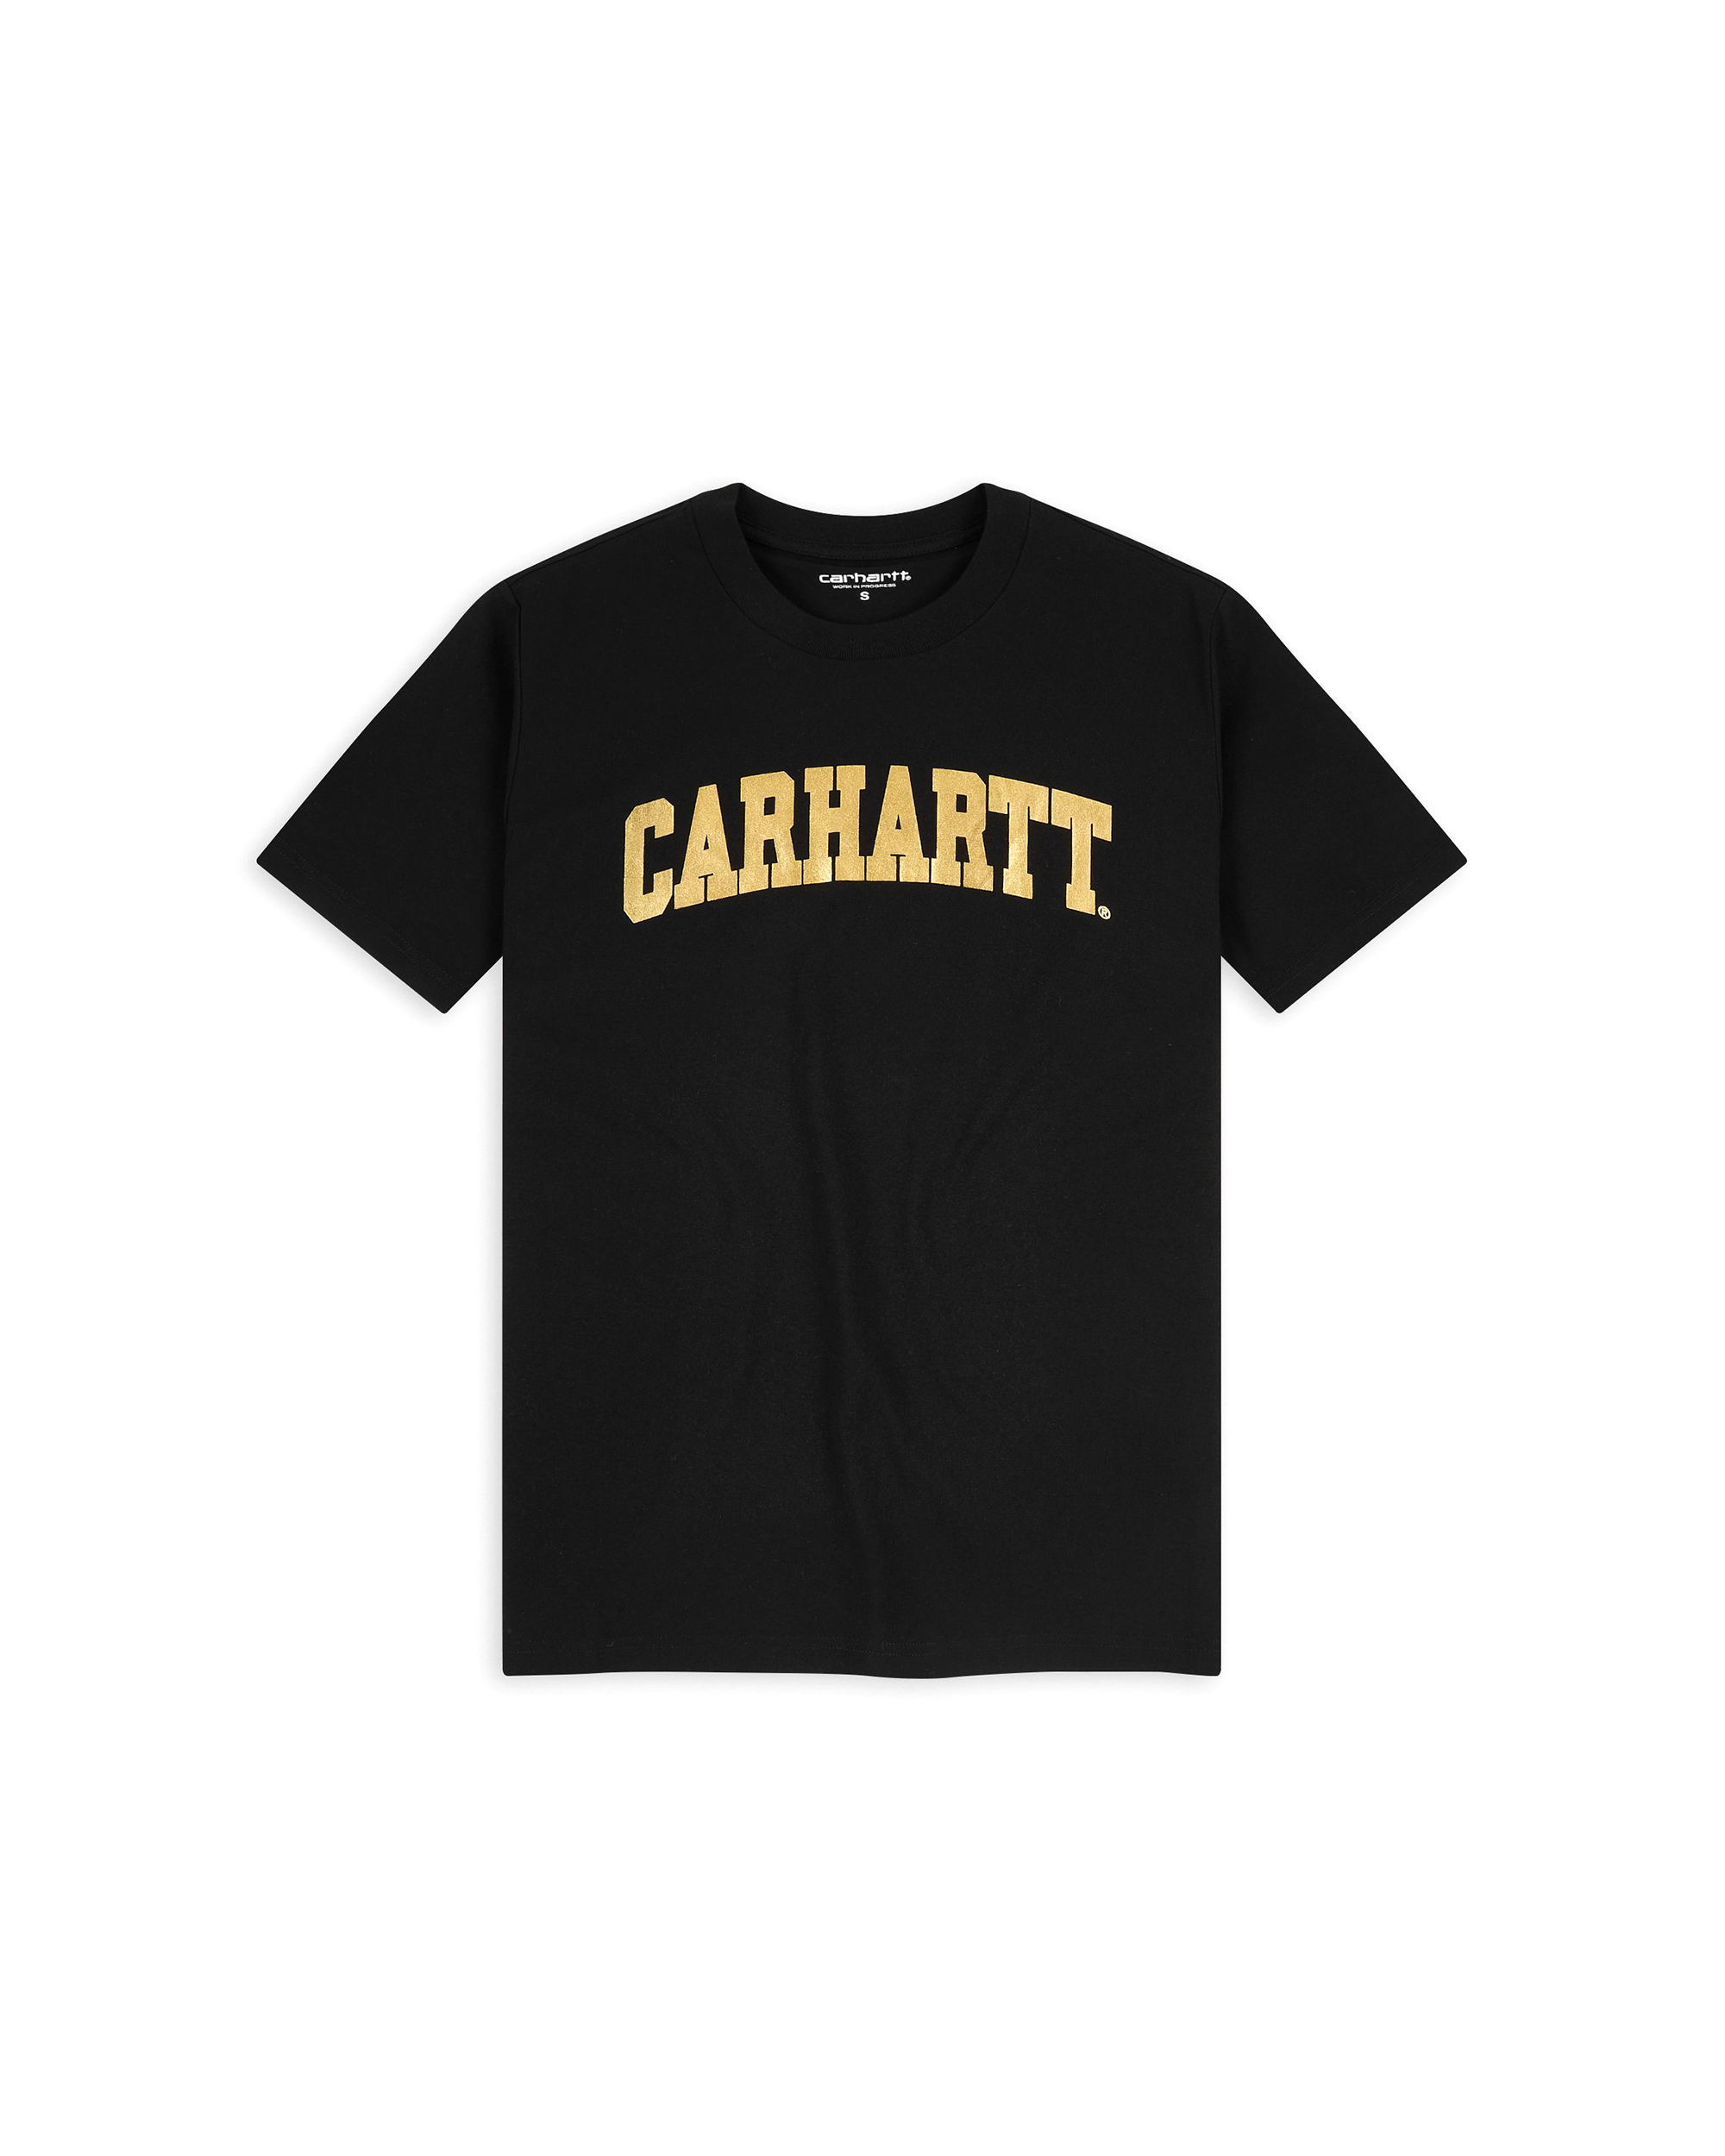 S/S University T-Shirt - Black / Gold